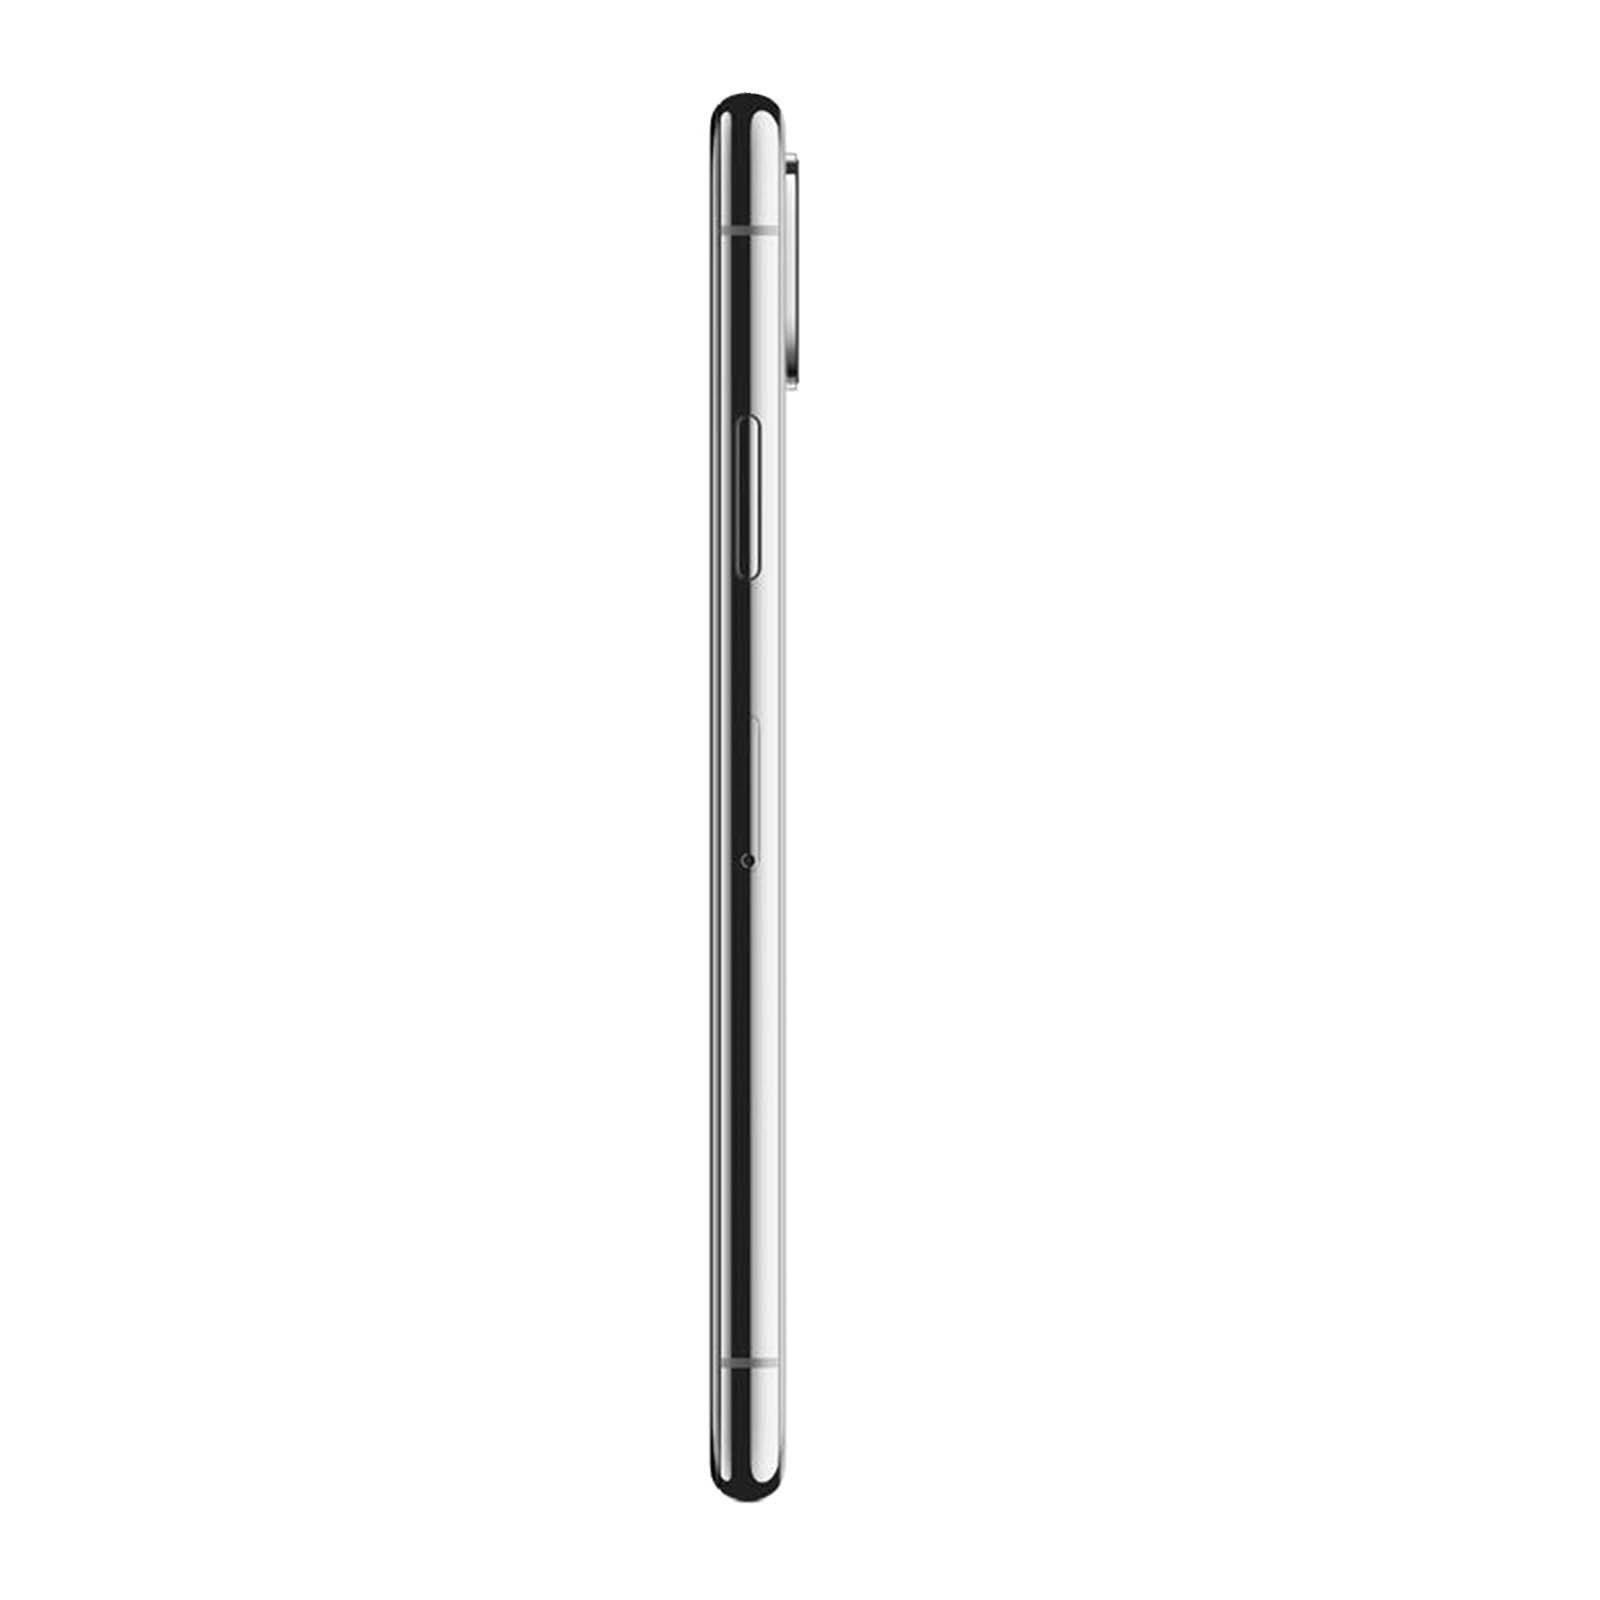 Apple iPhone XS 64GB Silver Pristine - Unlocked